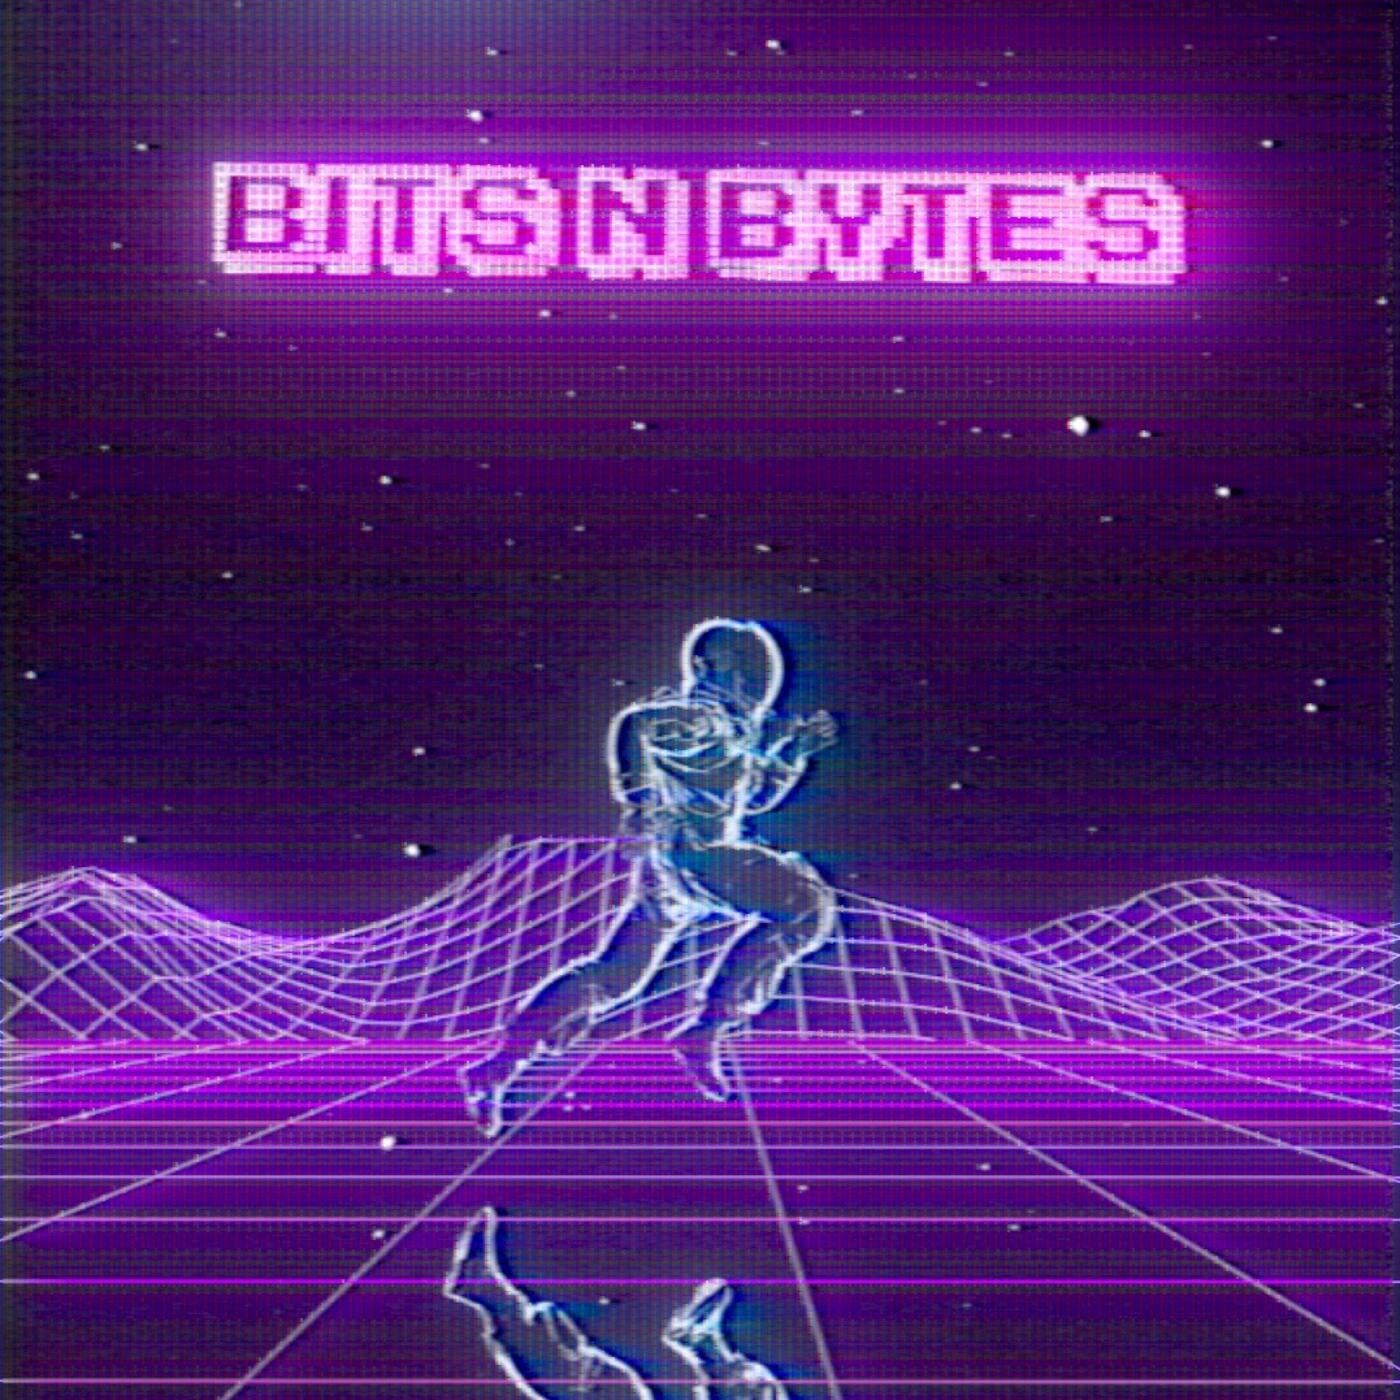 Bits and Bytes